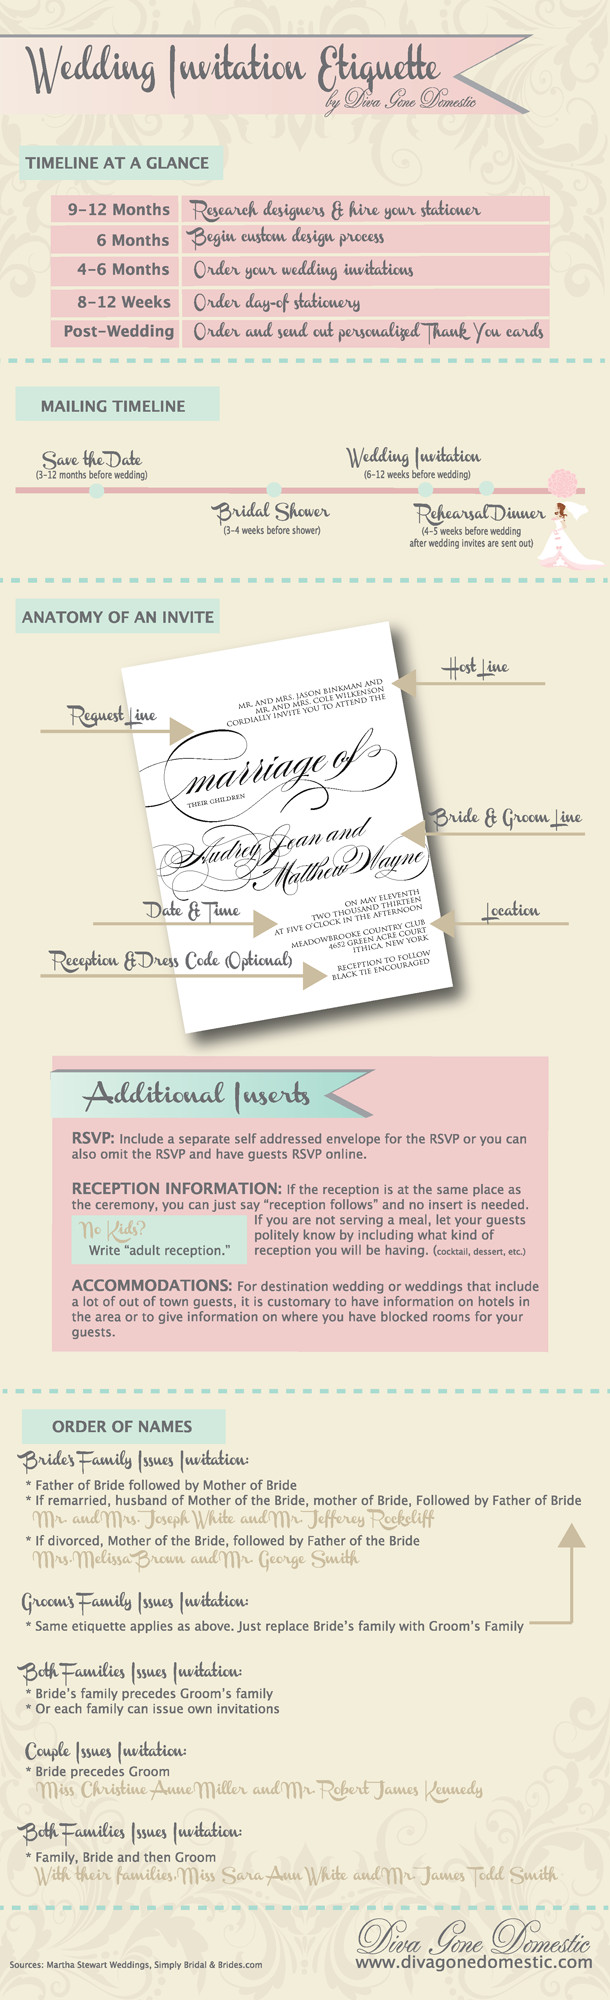 Wedding Invitation Etiquette
 25 Informal Wedding Invitation Wording Ideas